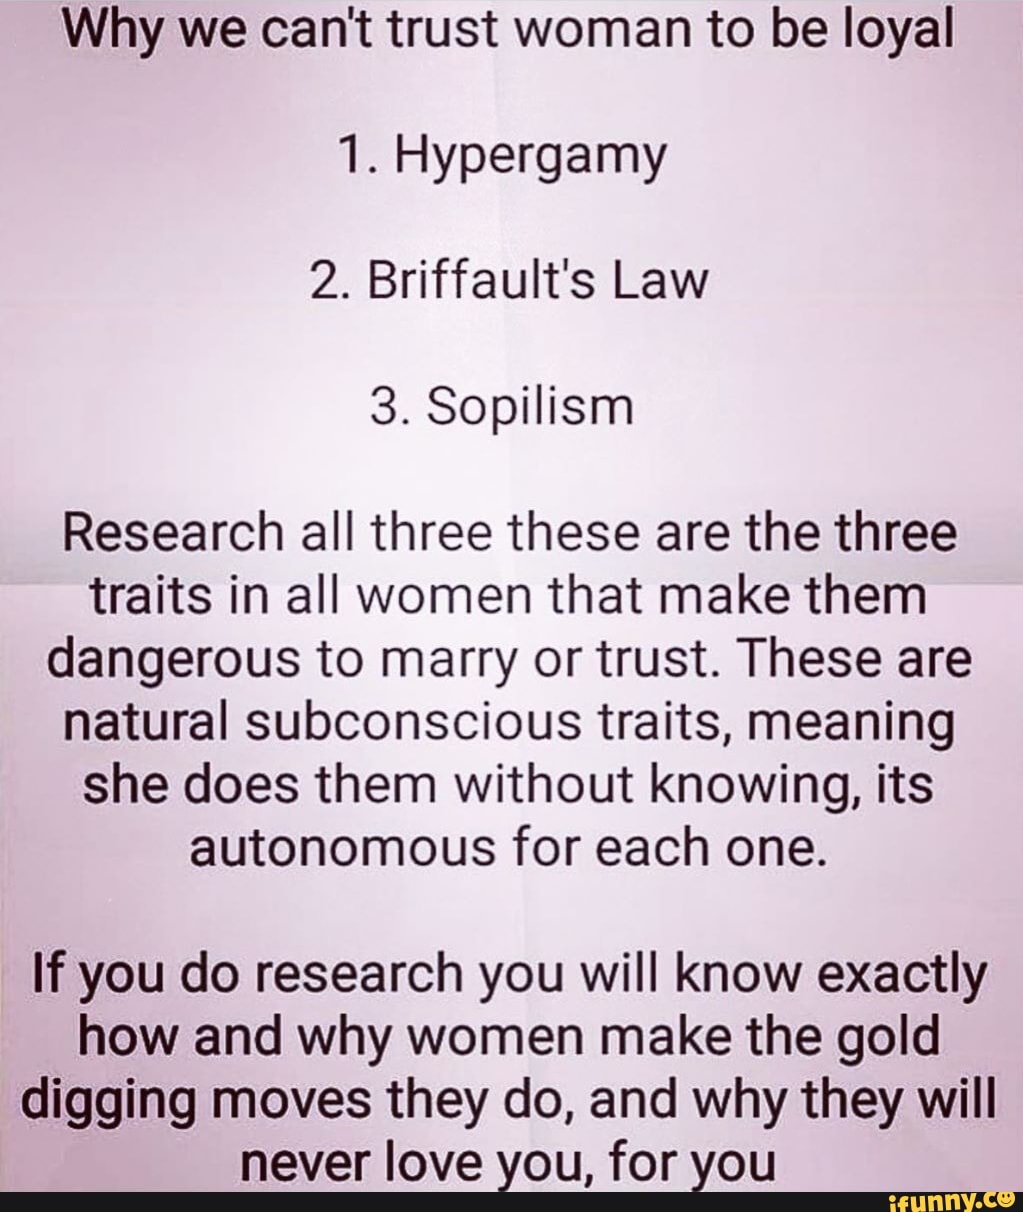 Traits of a loyal woman